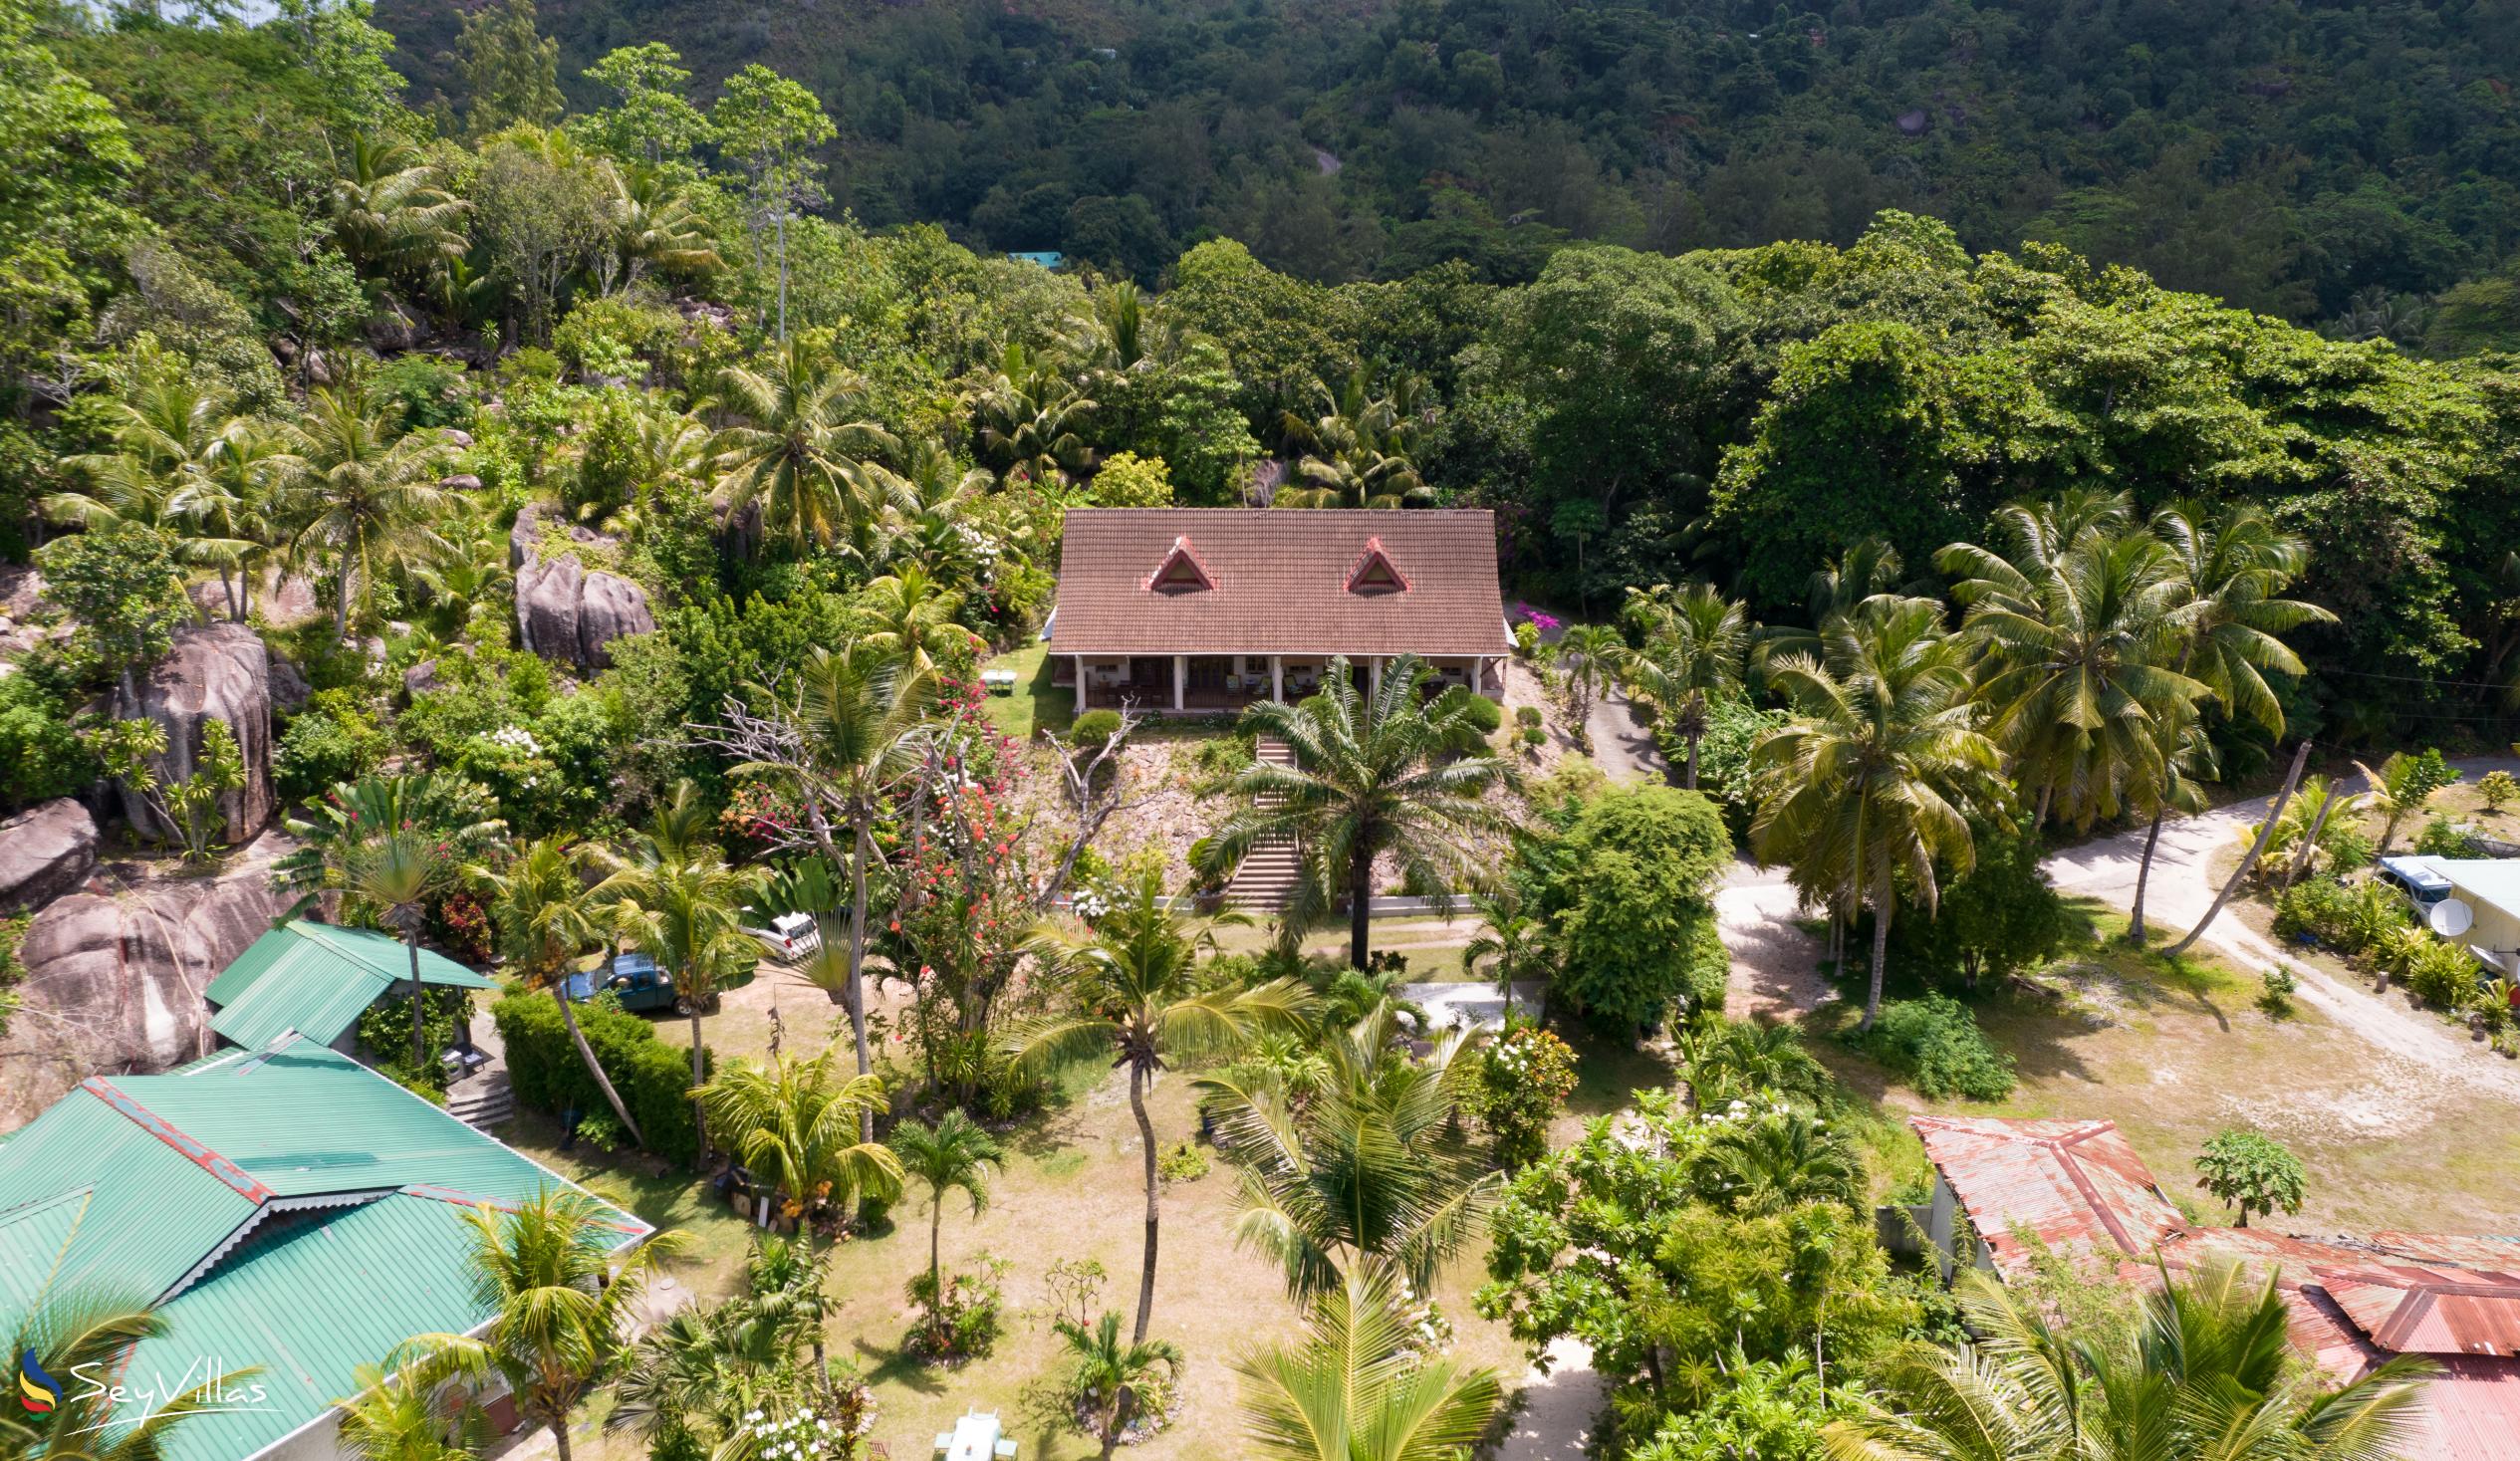 Photo 7: Villas du Voyageur - Outdoor area - Praslin (Seychelles)